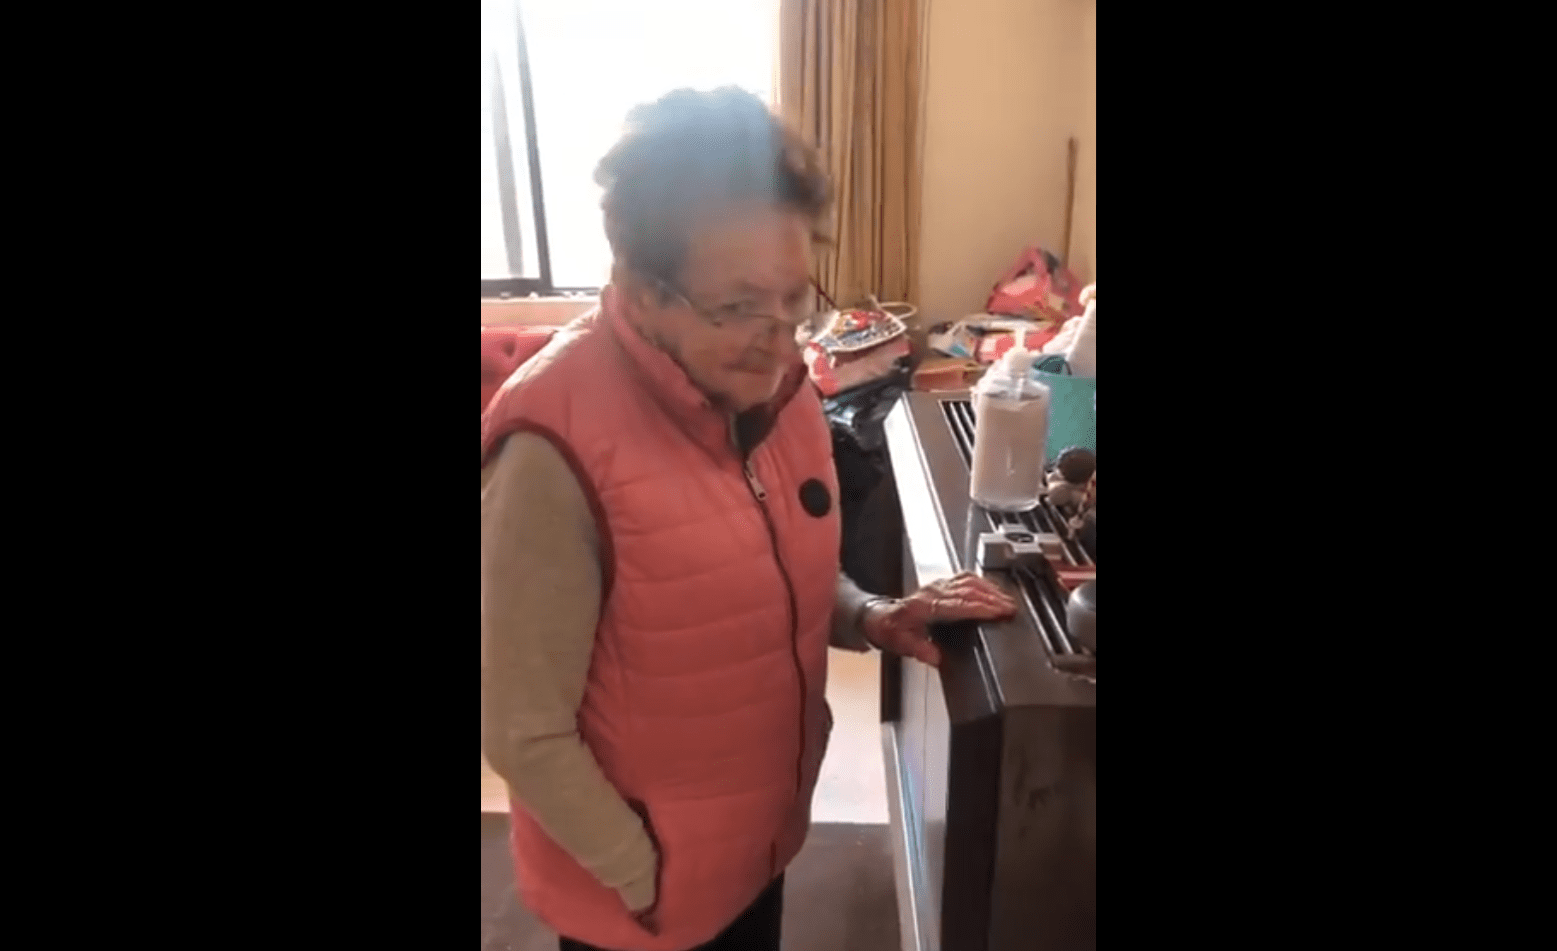 La abuela sonriendo escuchando música en el Amazon Echo Dot. | Foto: Twitter/sophiasinefe